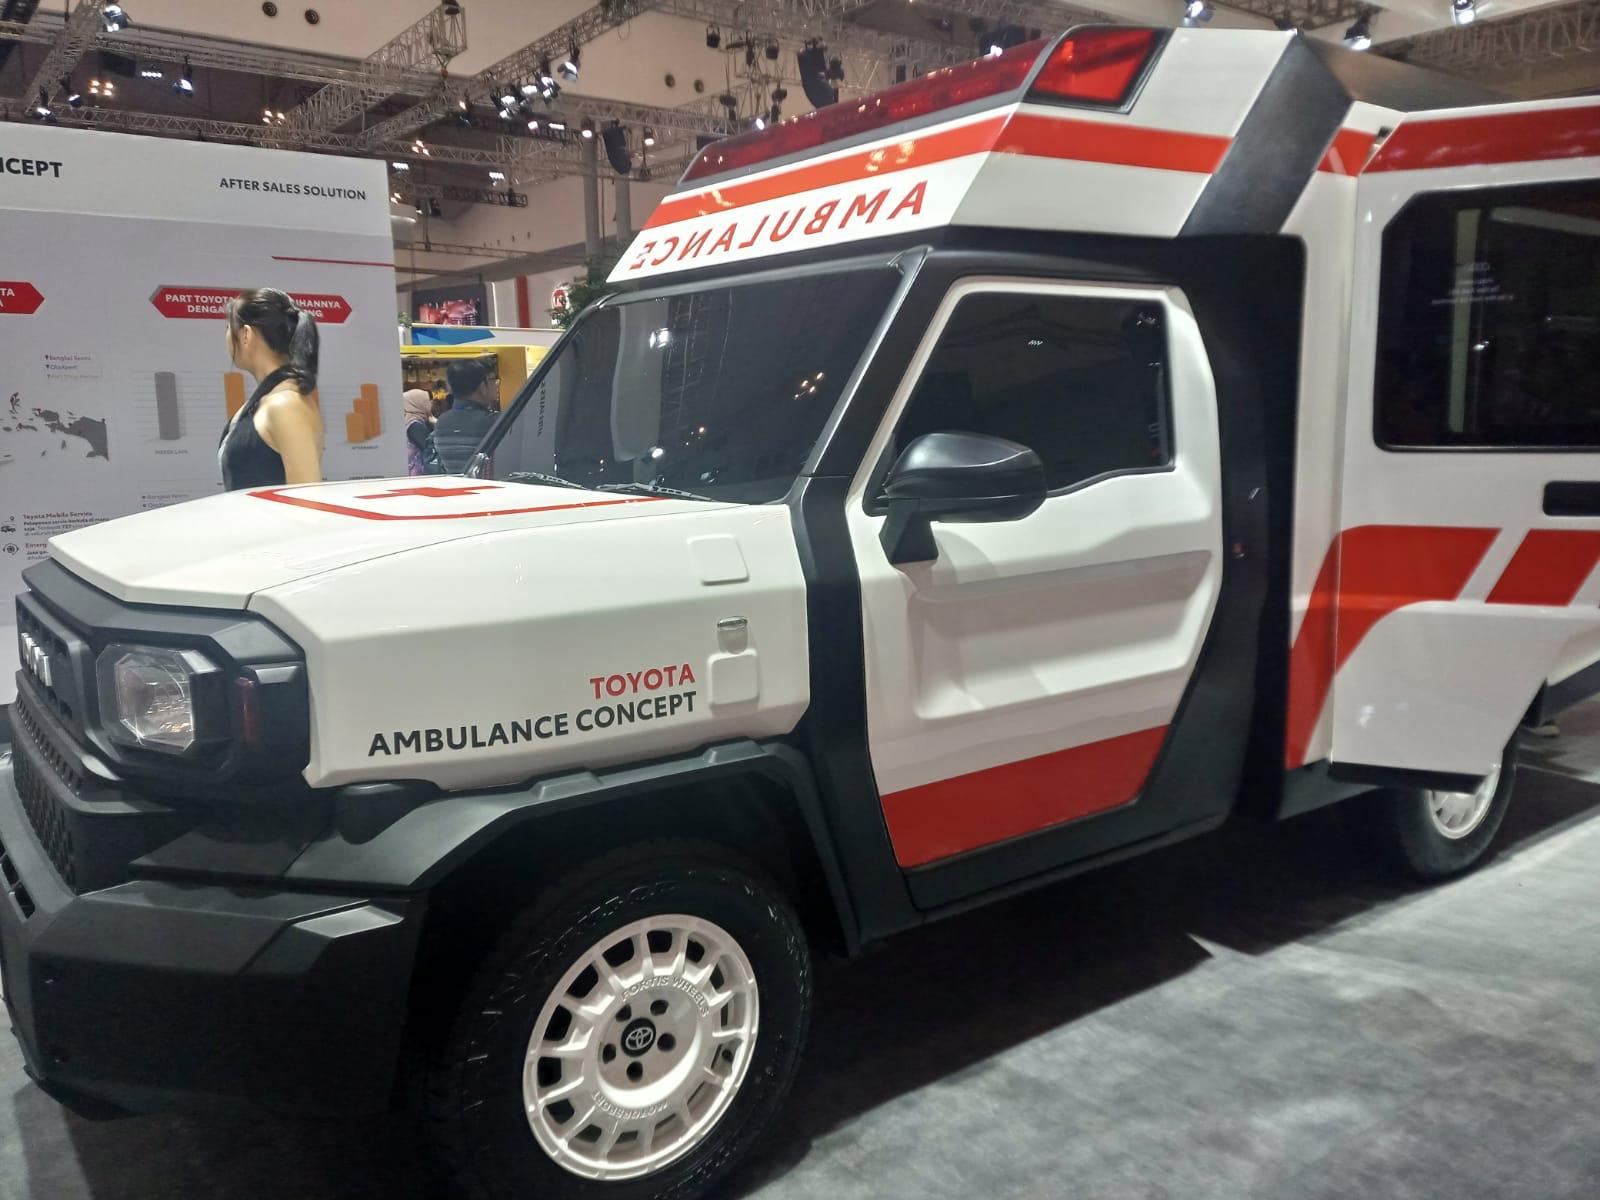 Toyota Rangga Concept model Ambulan